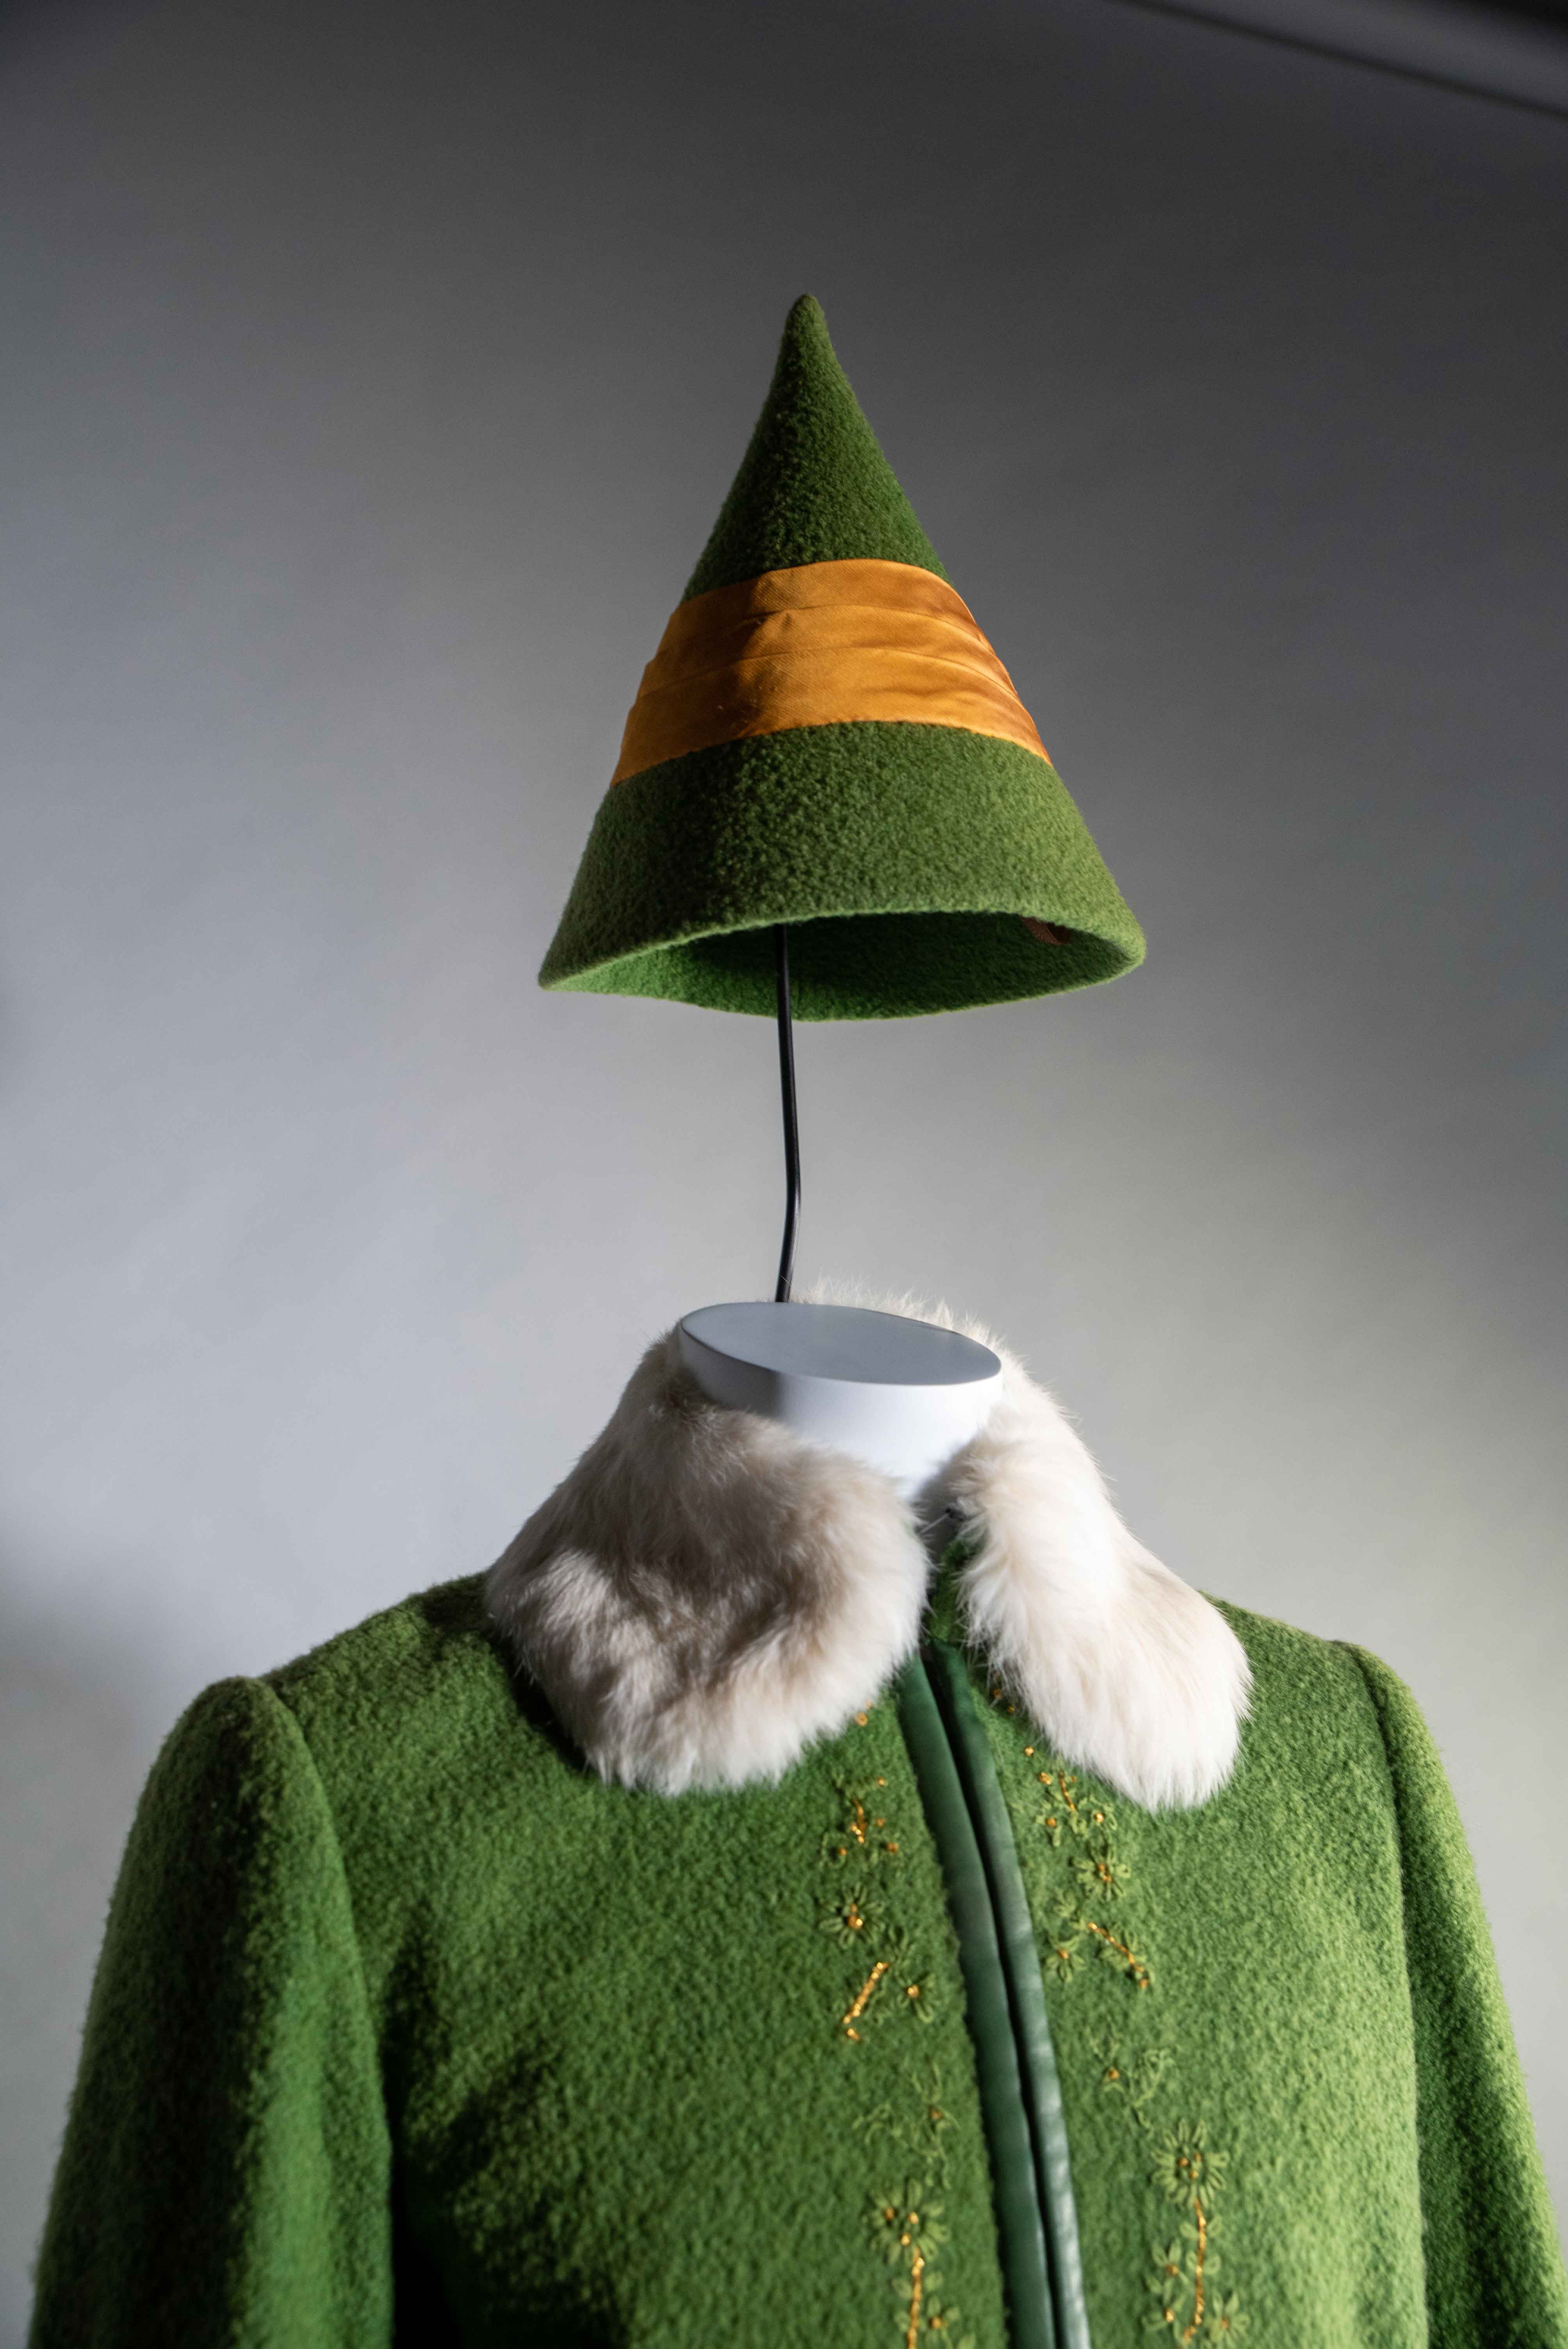 Buddy the Elf costume worn by Will Ferrell